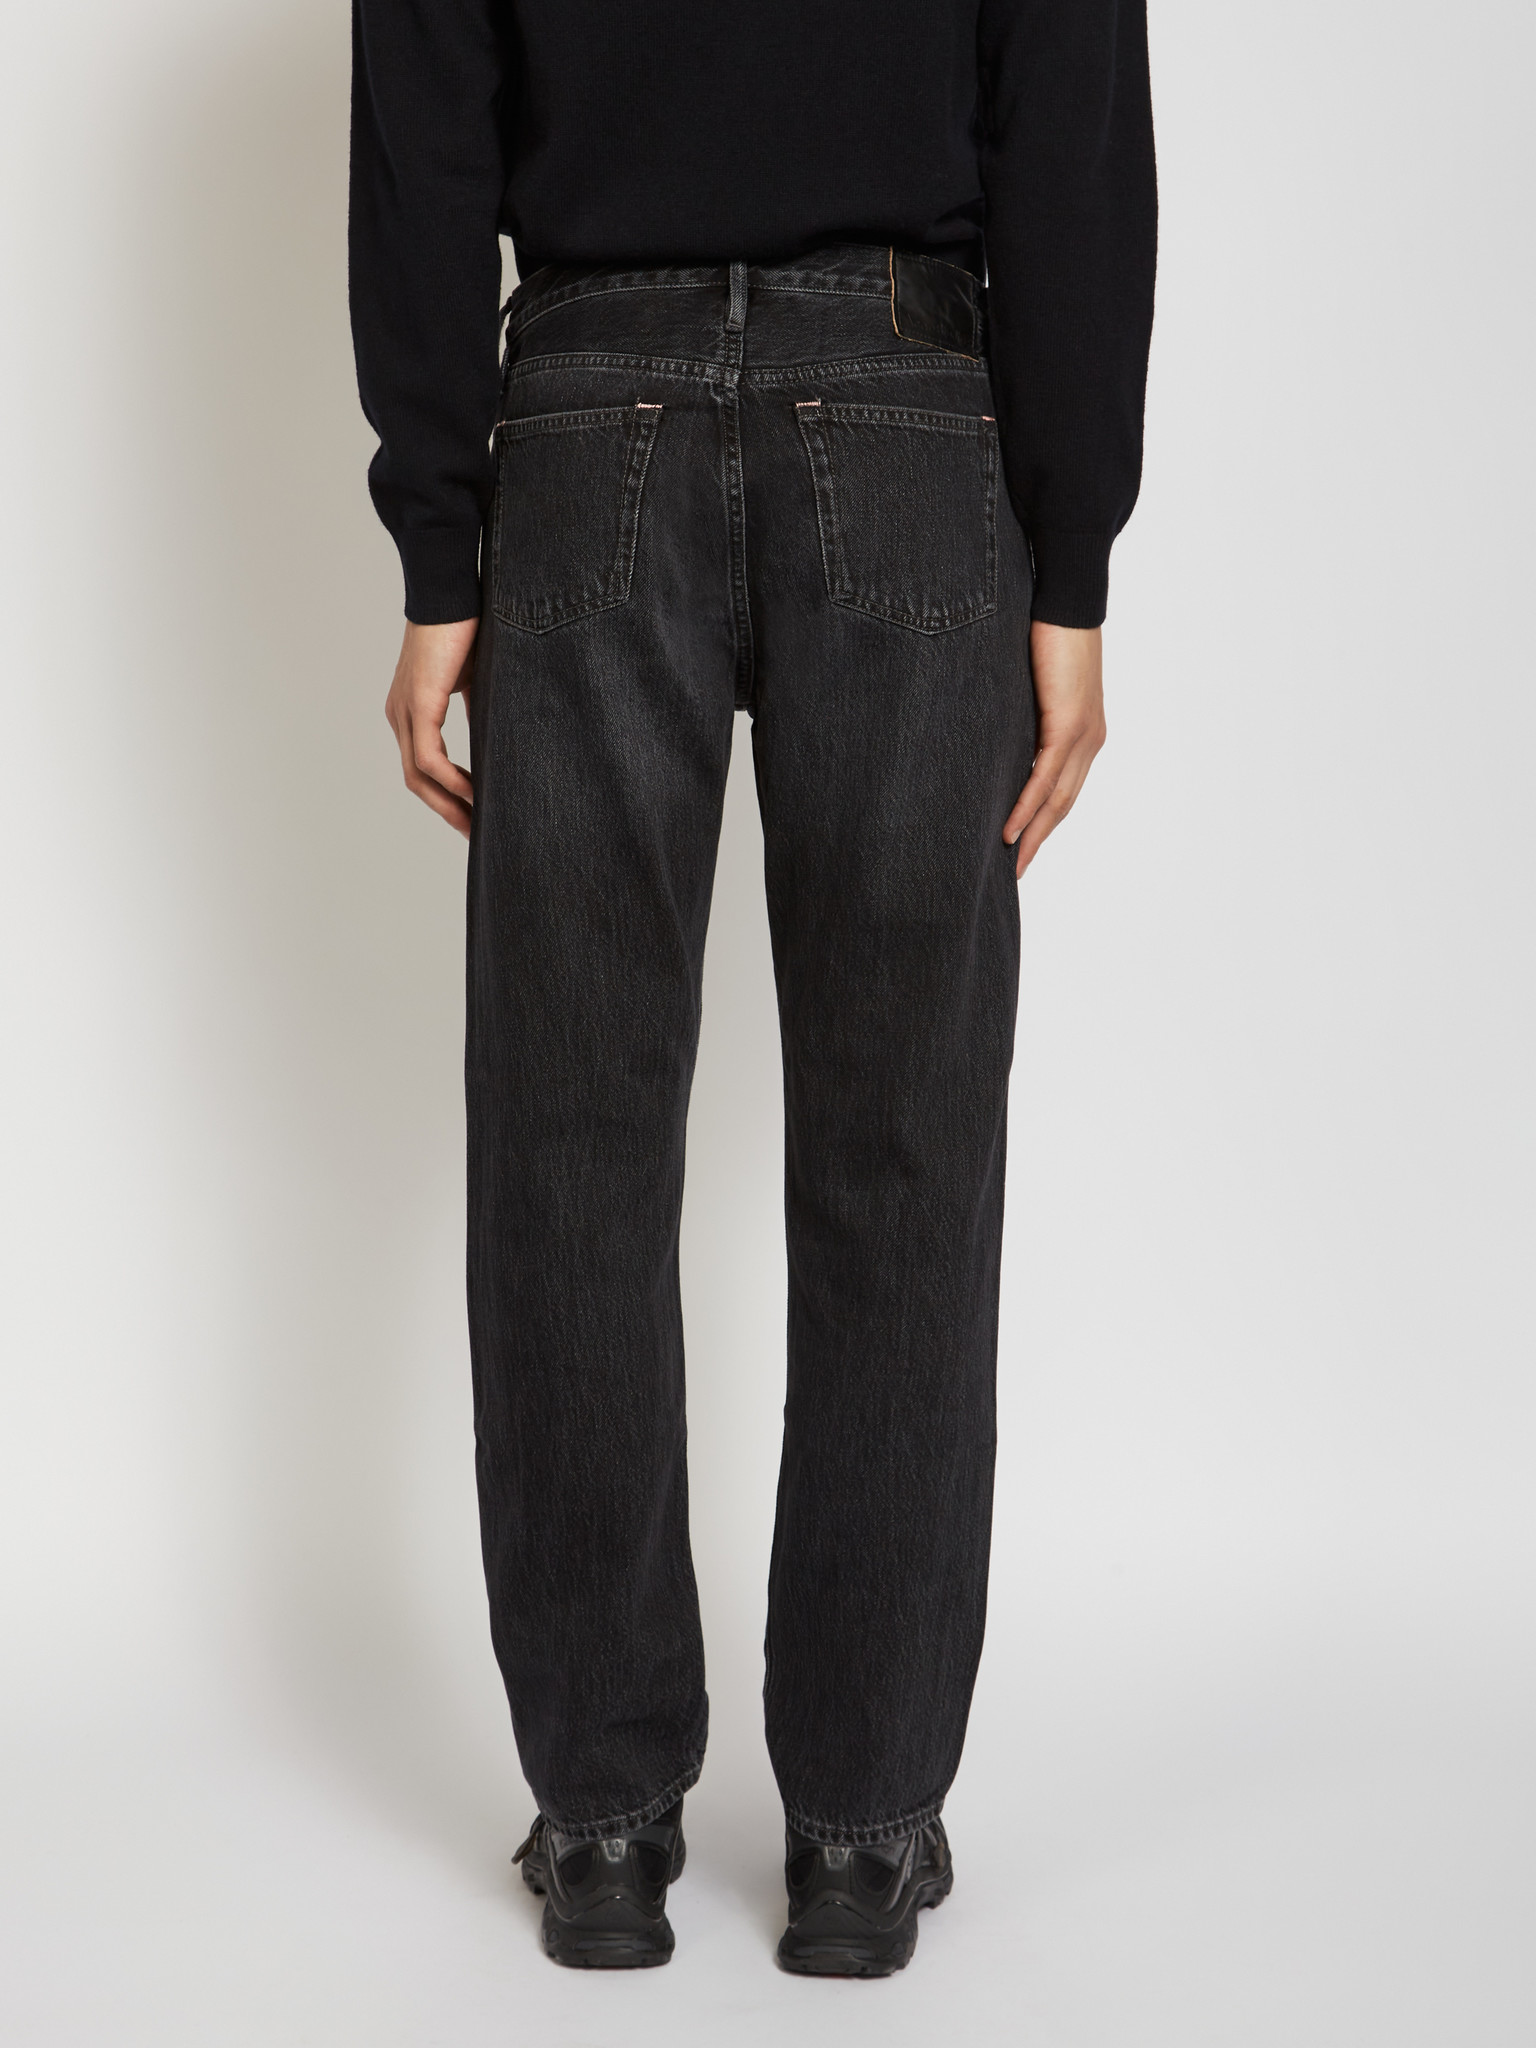 Acne Studio: Vintage Black Jeans 1996, Men's Designer Clothes